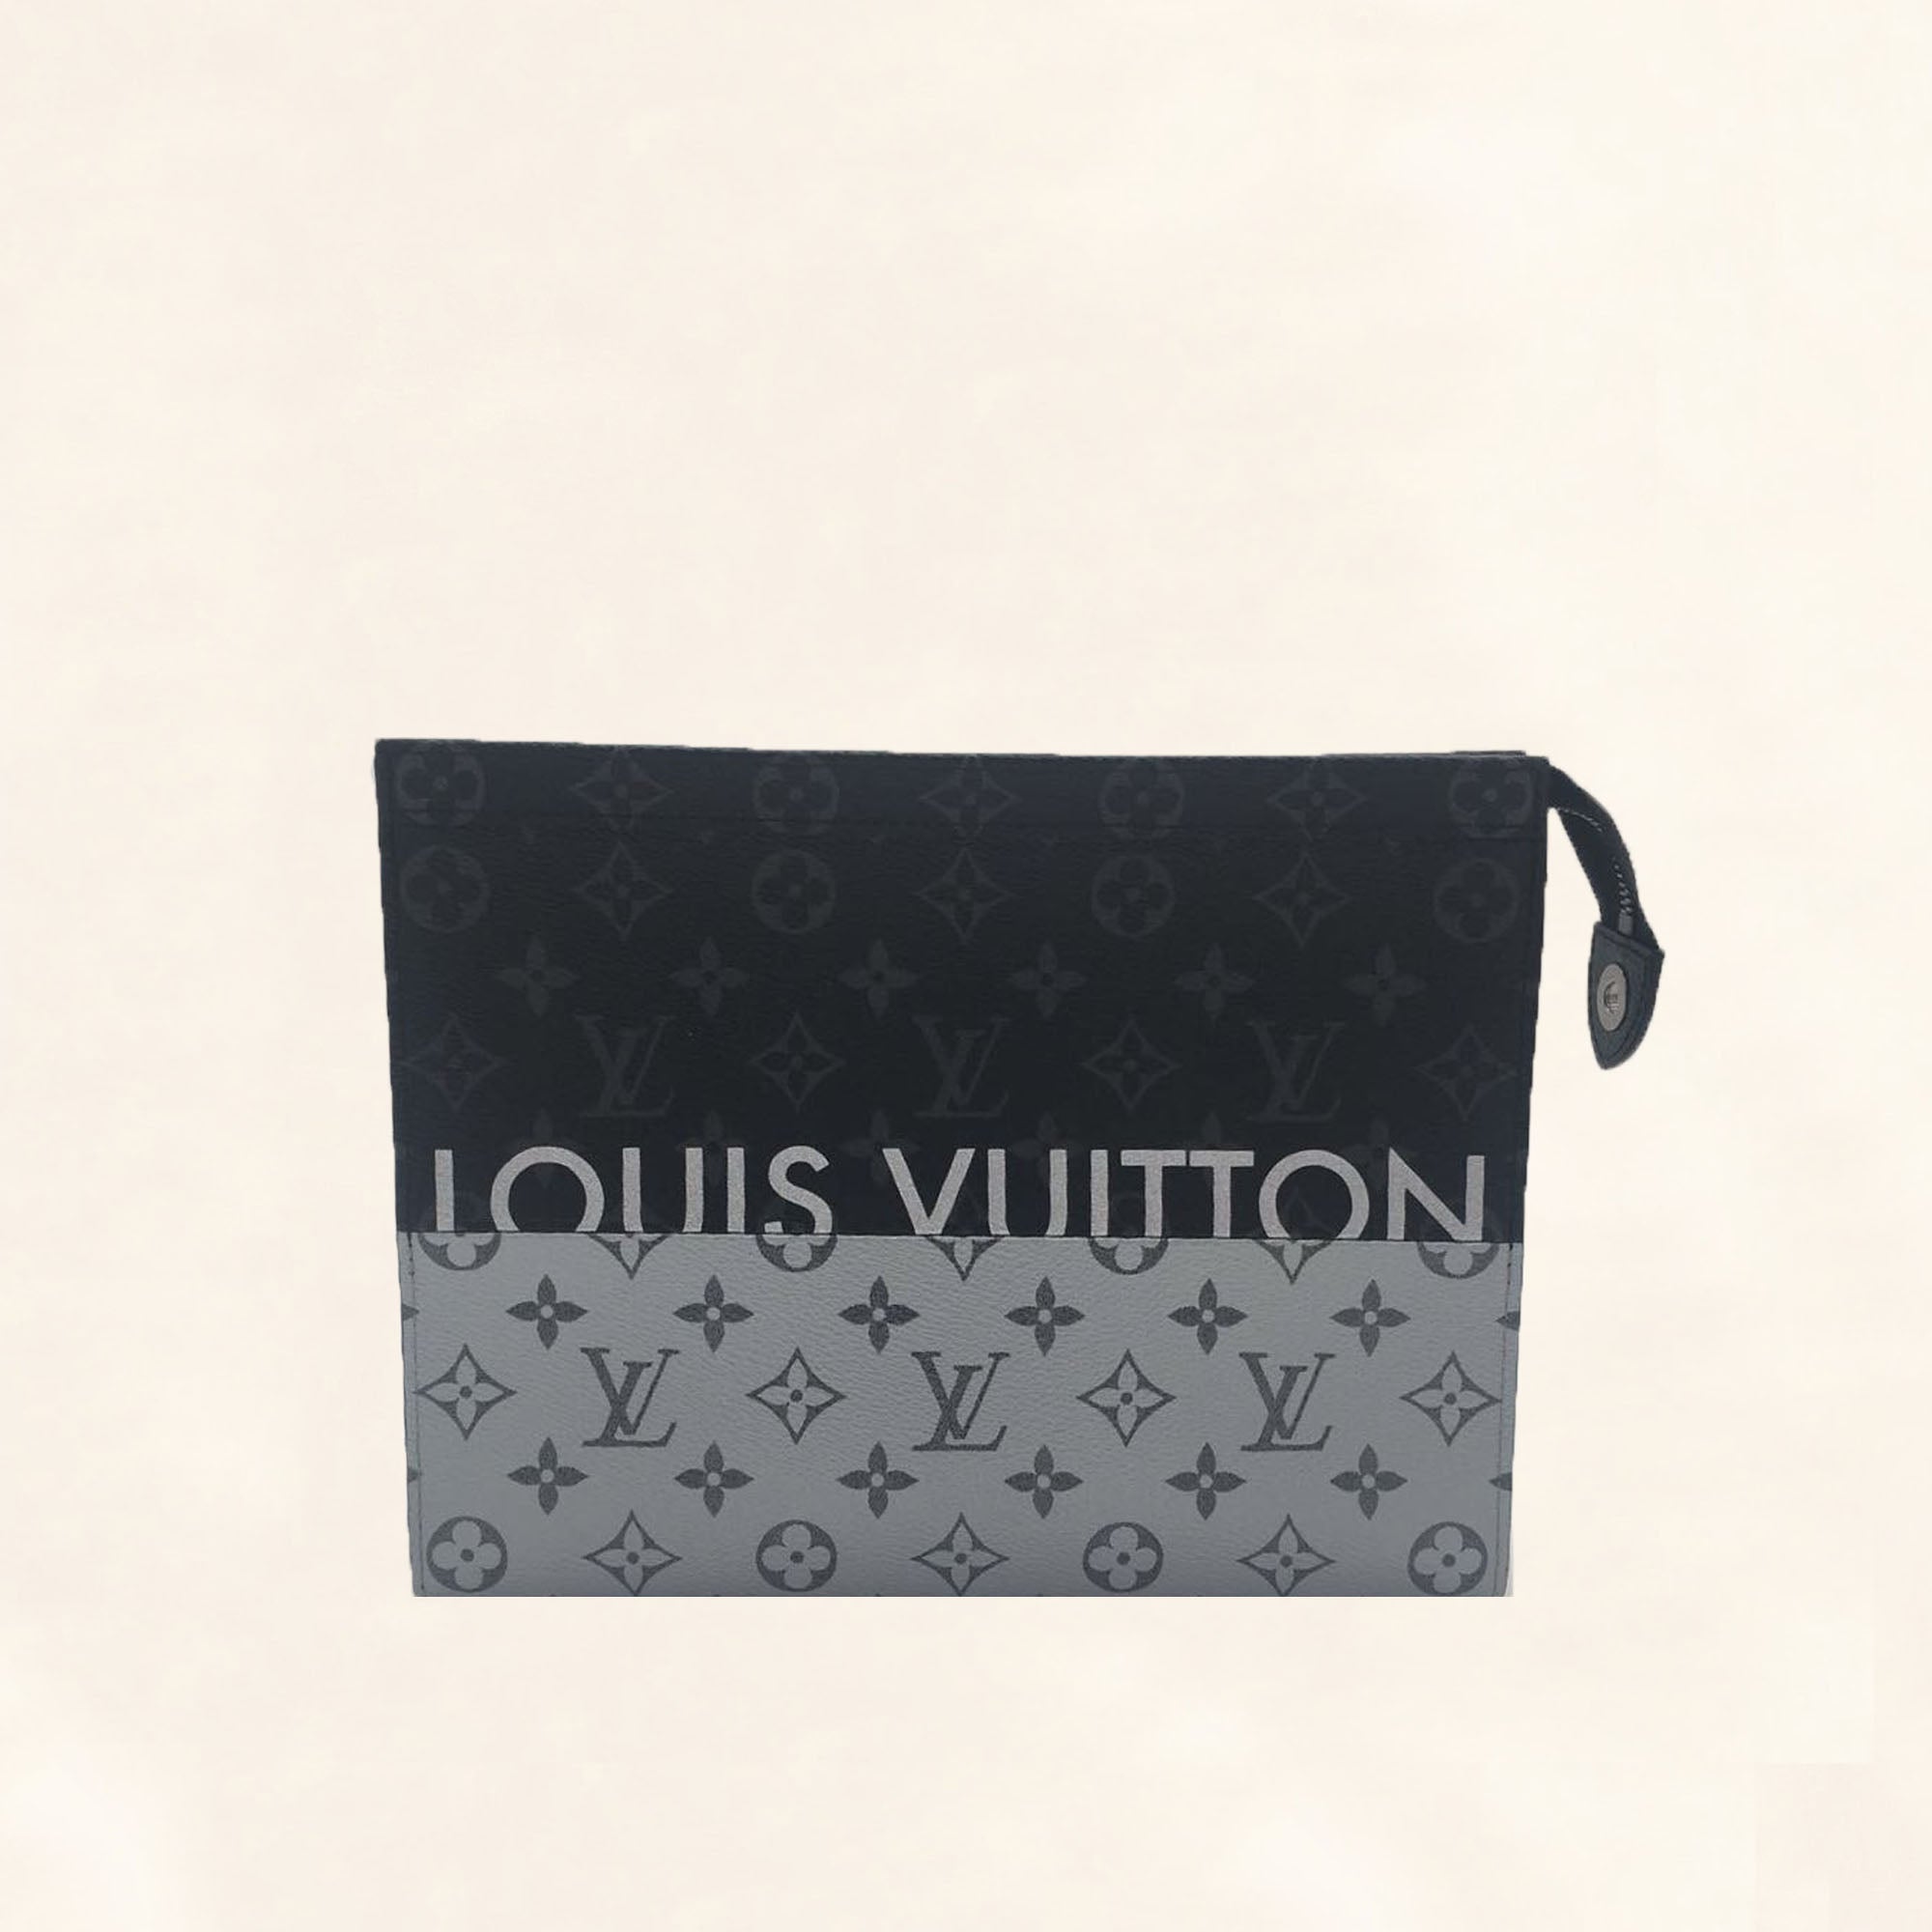 Louis Vuitton Pochette Voyage Limited Edition